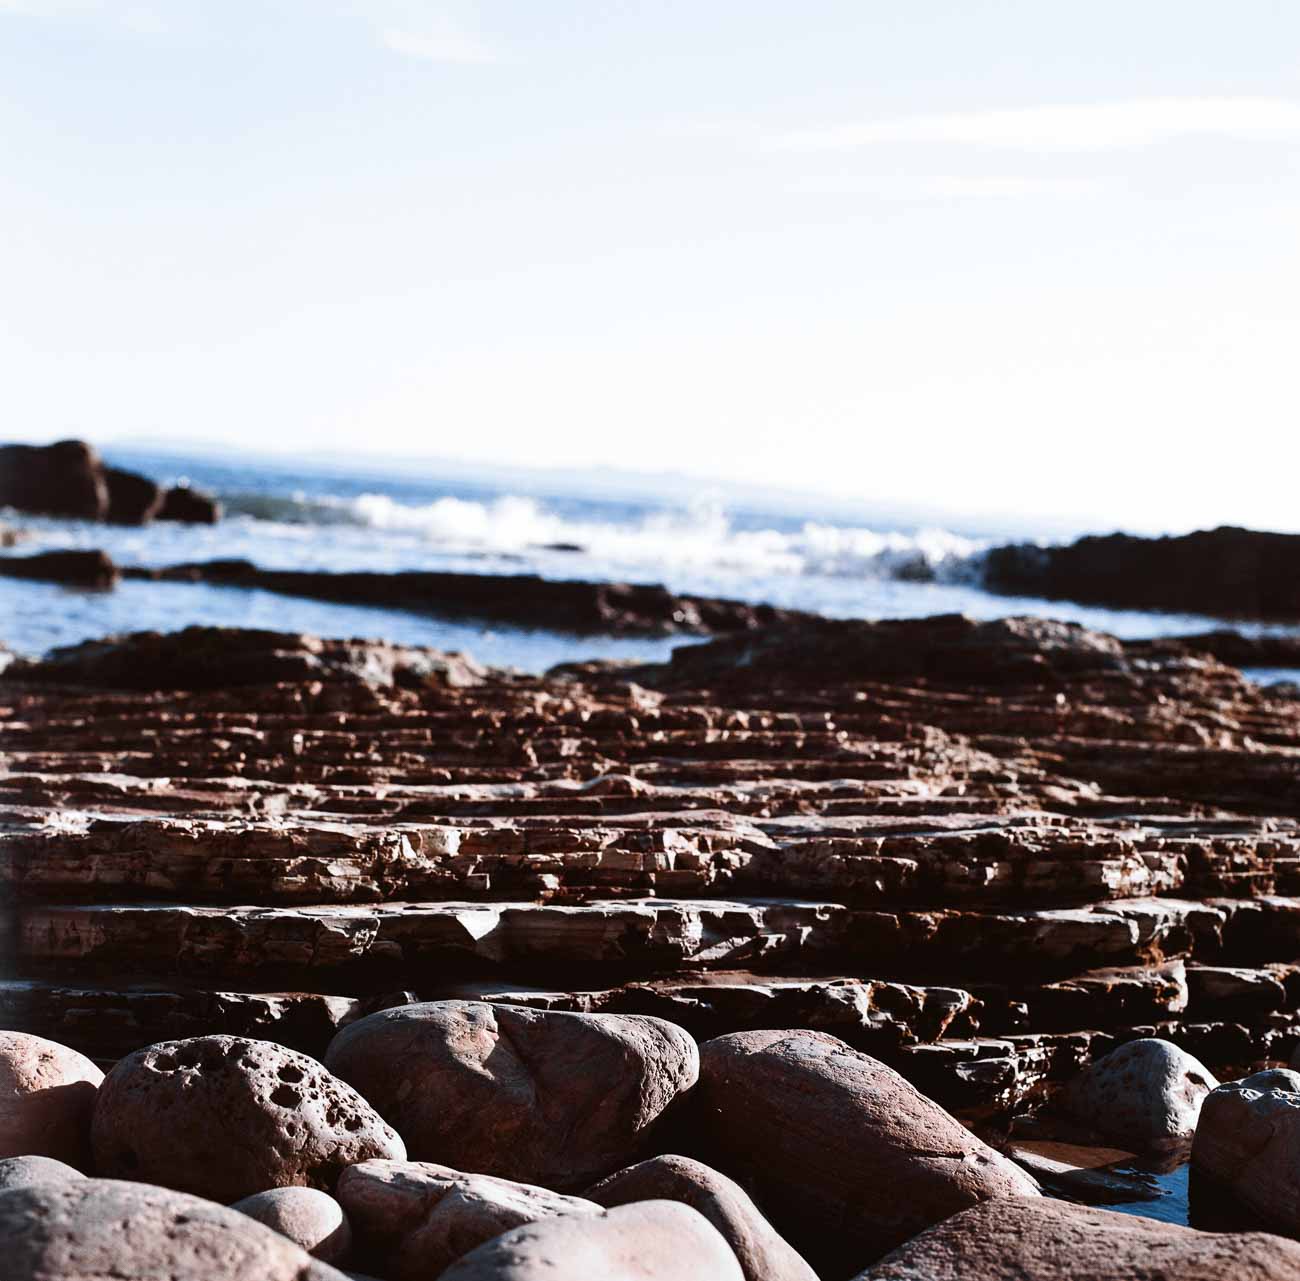 Rocks on a beach in San Pedro, CA, photographed with a Hasselblad 500c and Kodak Ektar